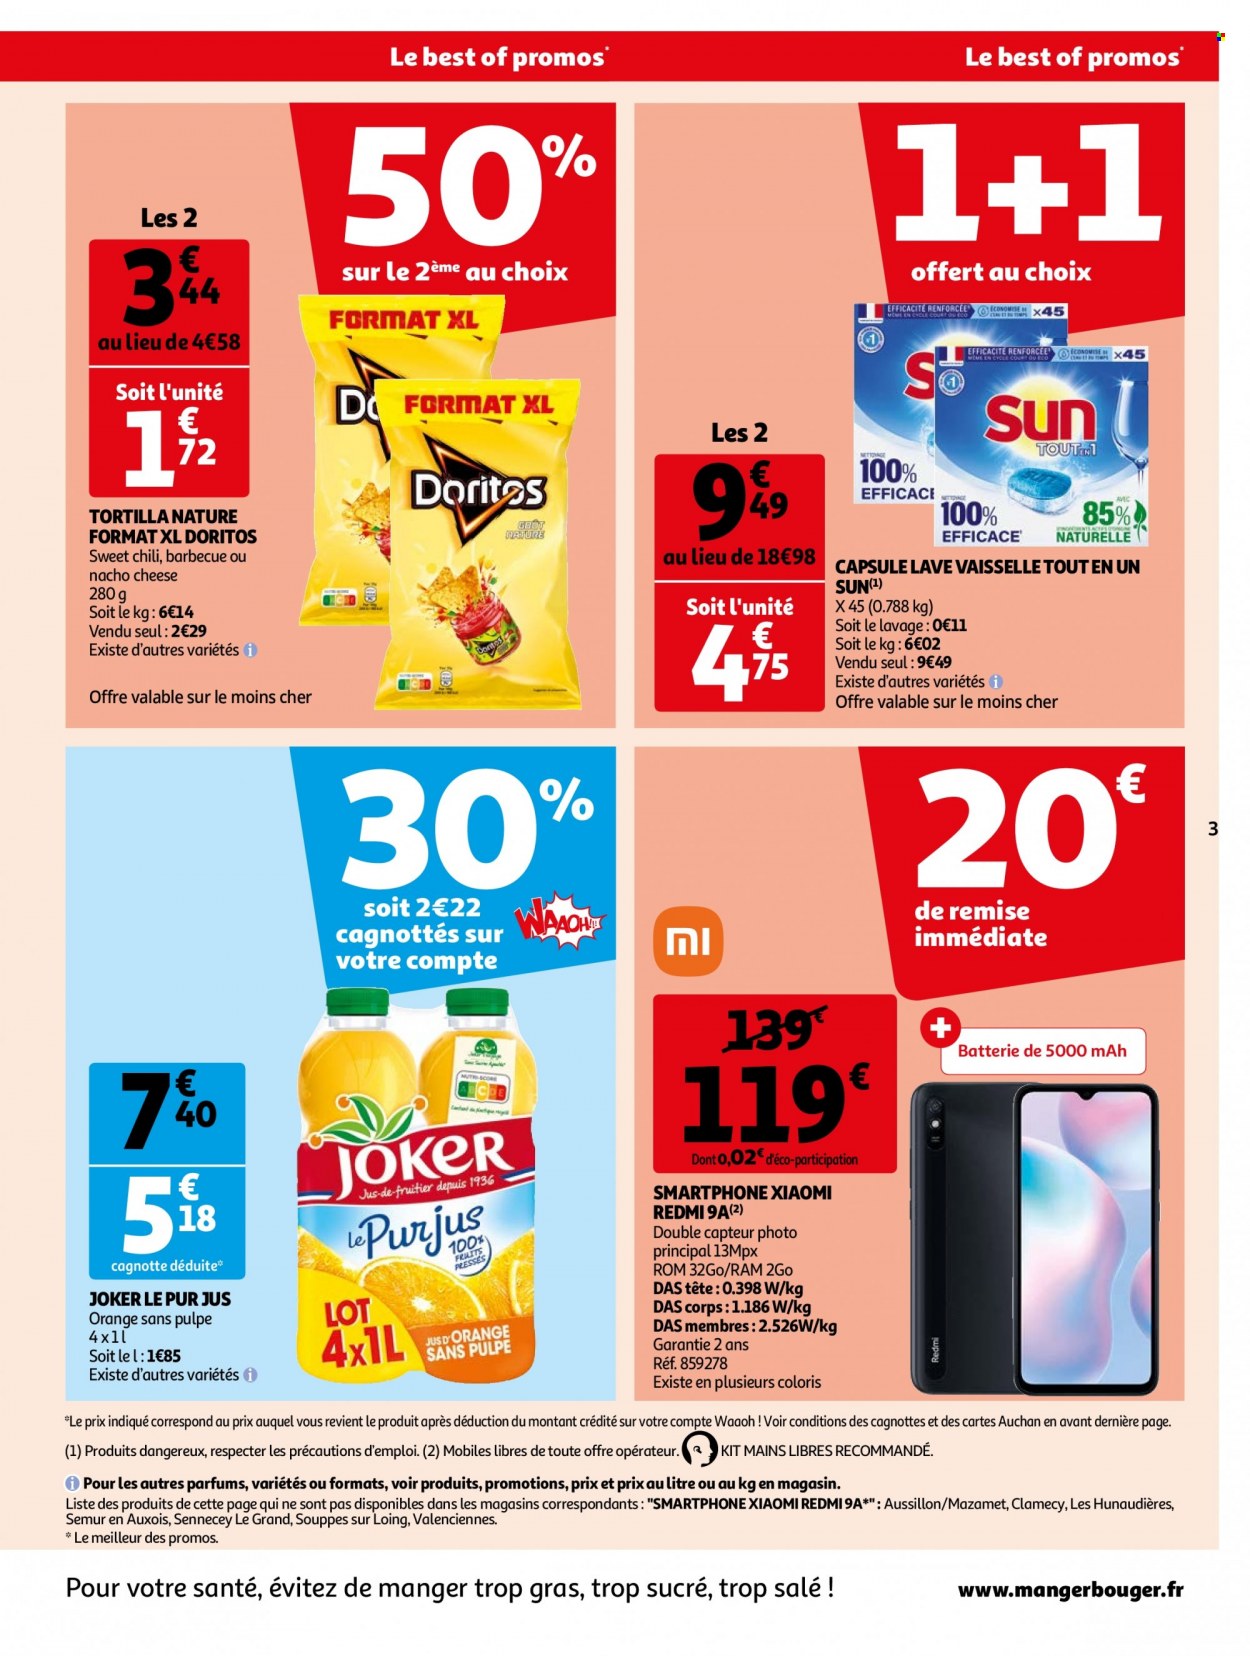 thumbnail - Catalogue Auchan - 14/02/2023 - 20/02/2023 - Produits soldés - Doritos, nacho, jus, Joker, jus d'orange, pur jus, Xiaomi, smartphone, barbecue. Page 3.